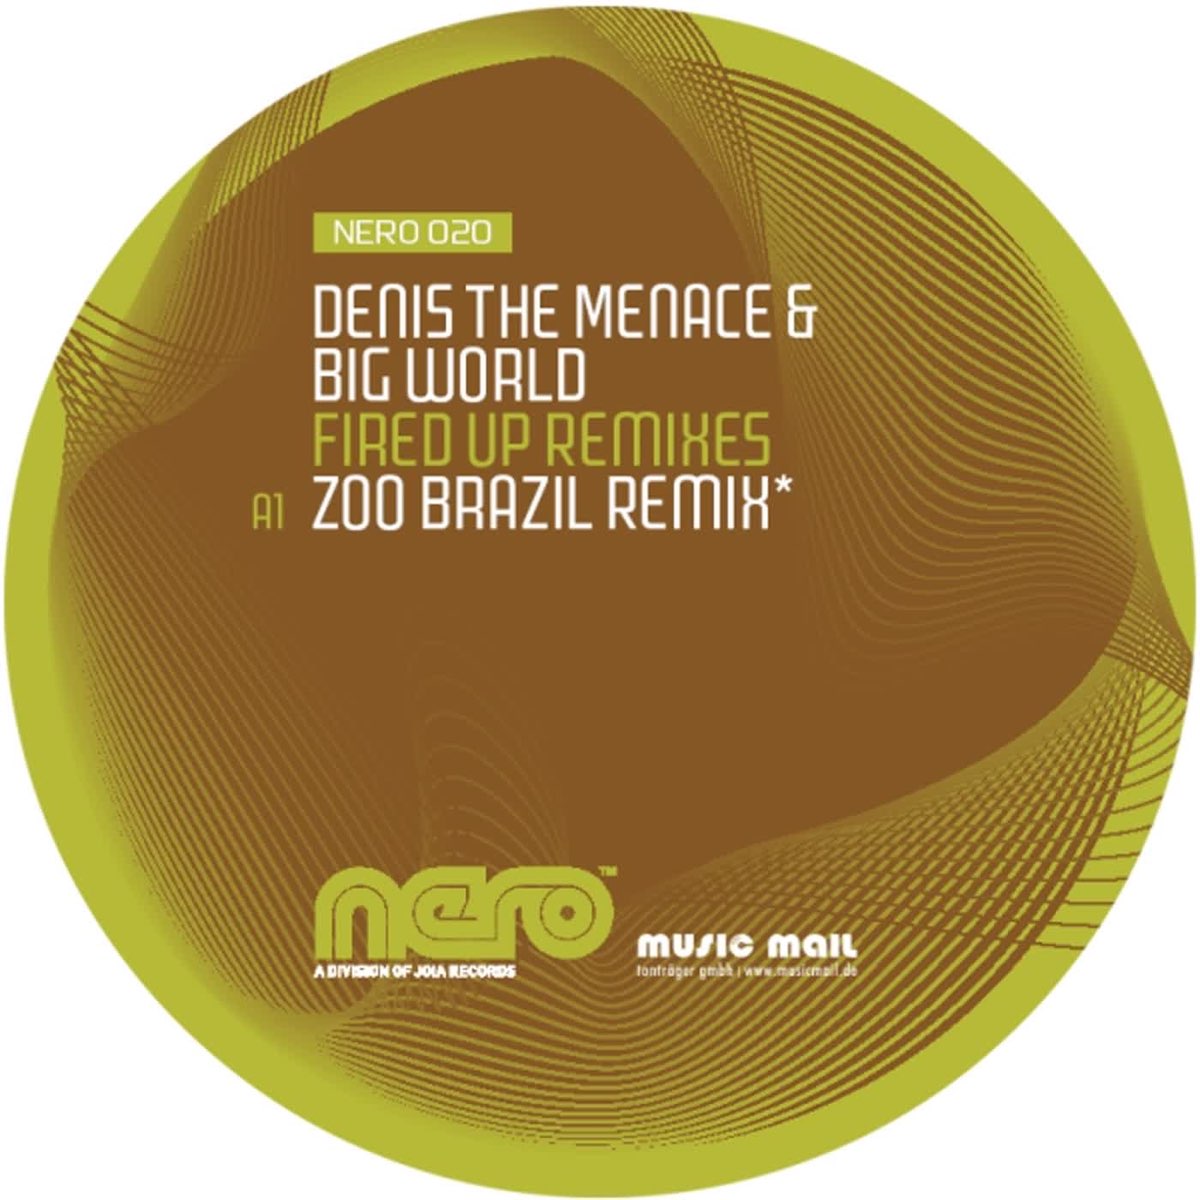 Denis the menace show. Big World & Denis the Menace. Fired up ремикс. Big World & Denis the Menace show. Big World & Denis the Menace show me a reason.